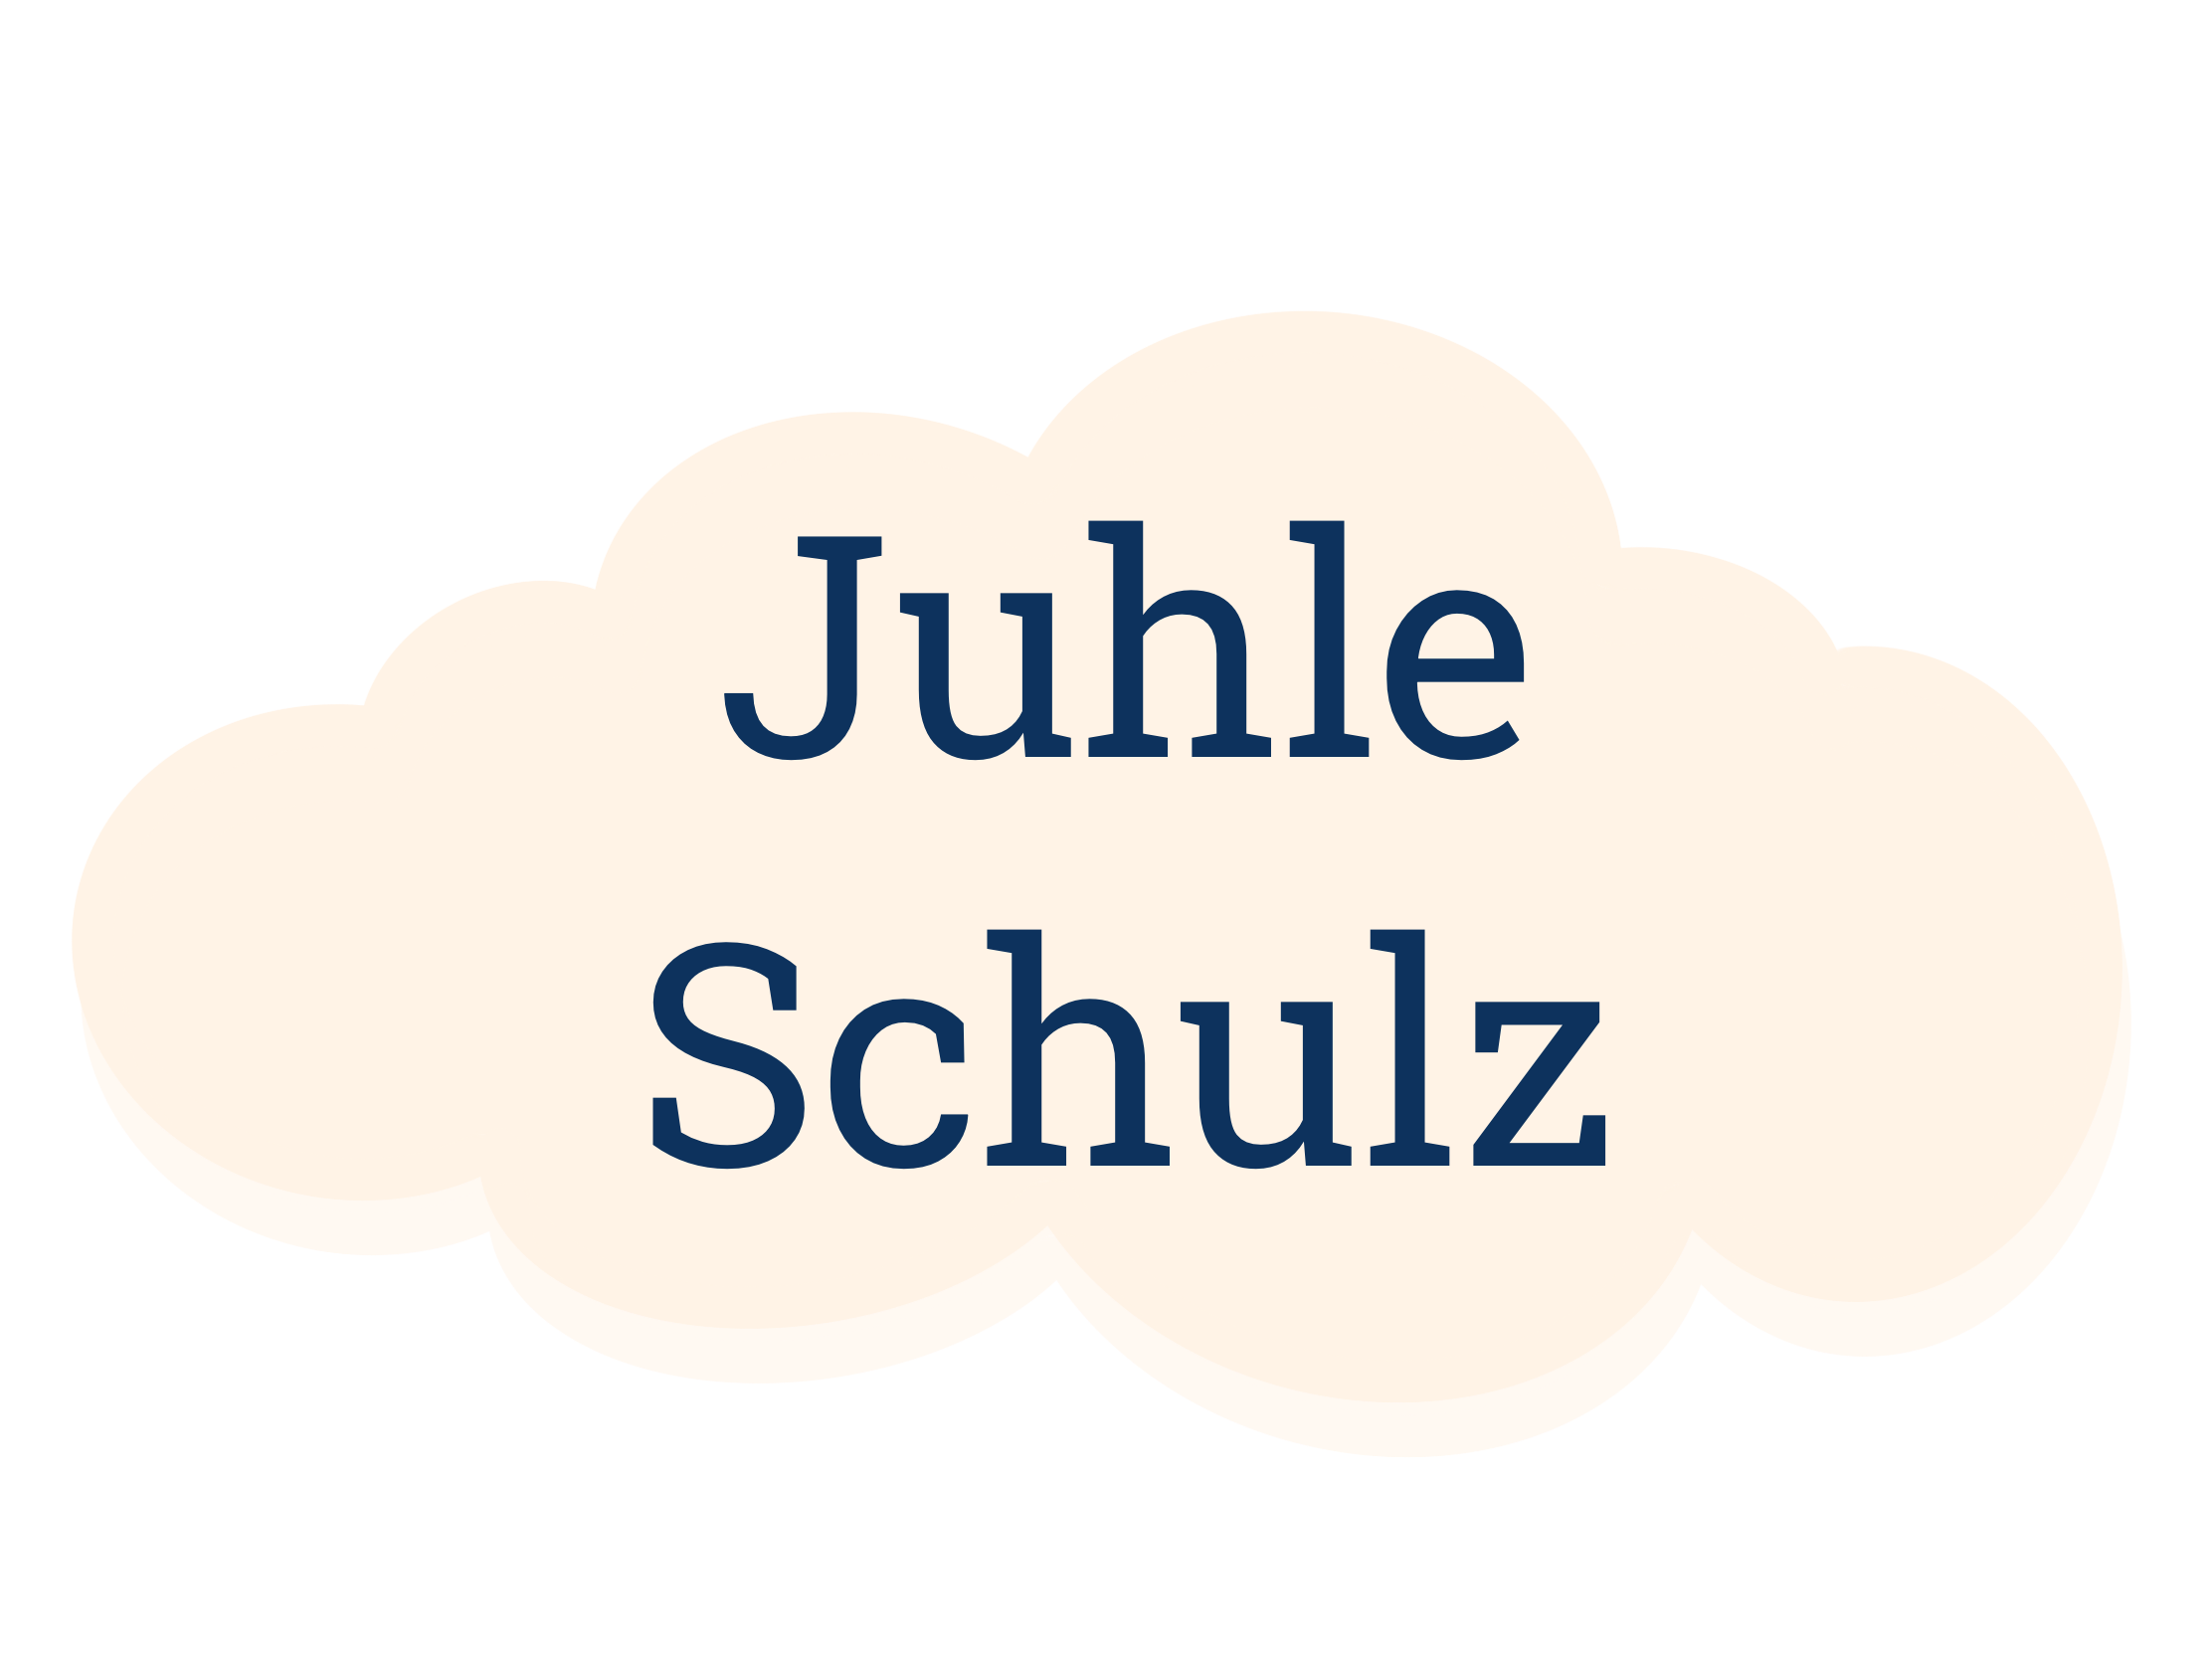 Wolke Name: Juhle SChulz